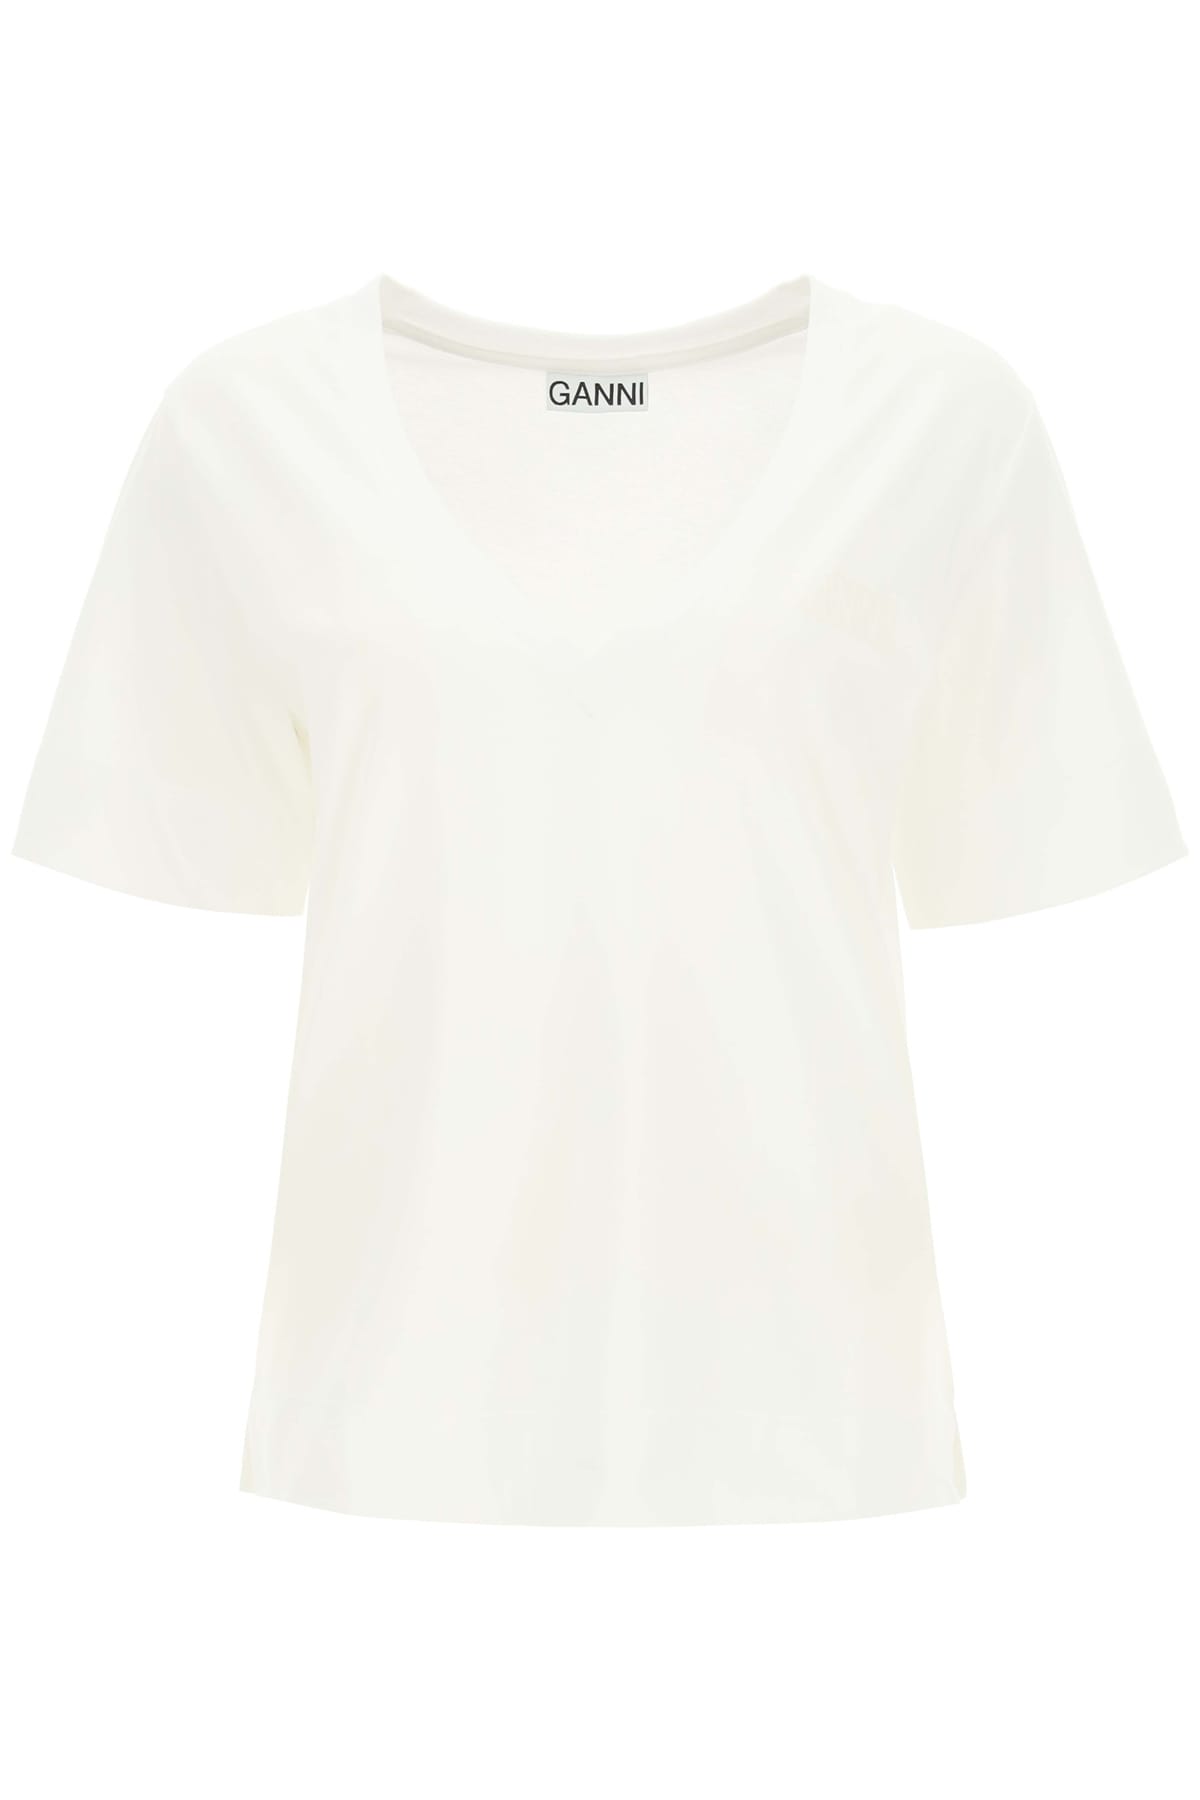 Ganni Software T-shirt Logo Print